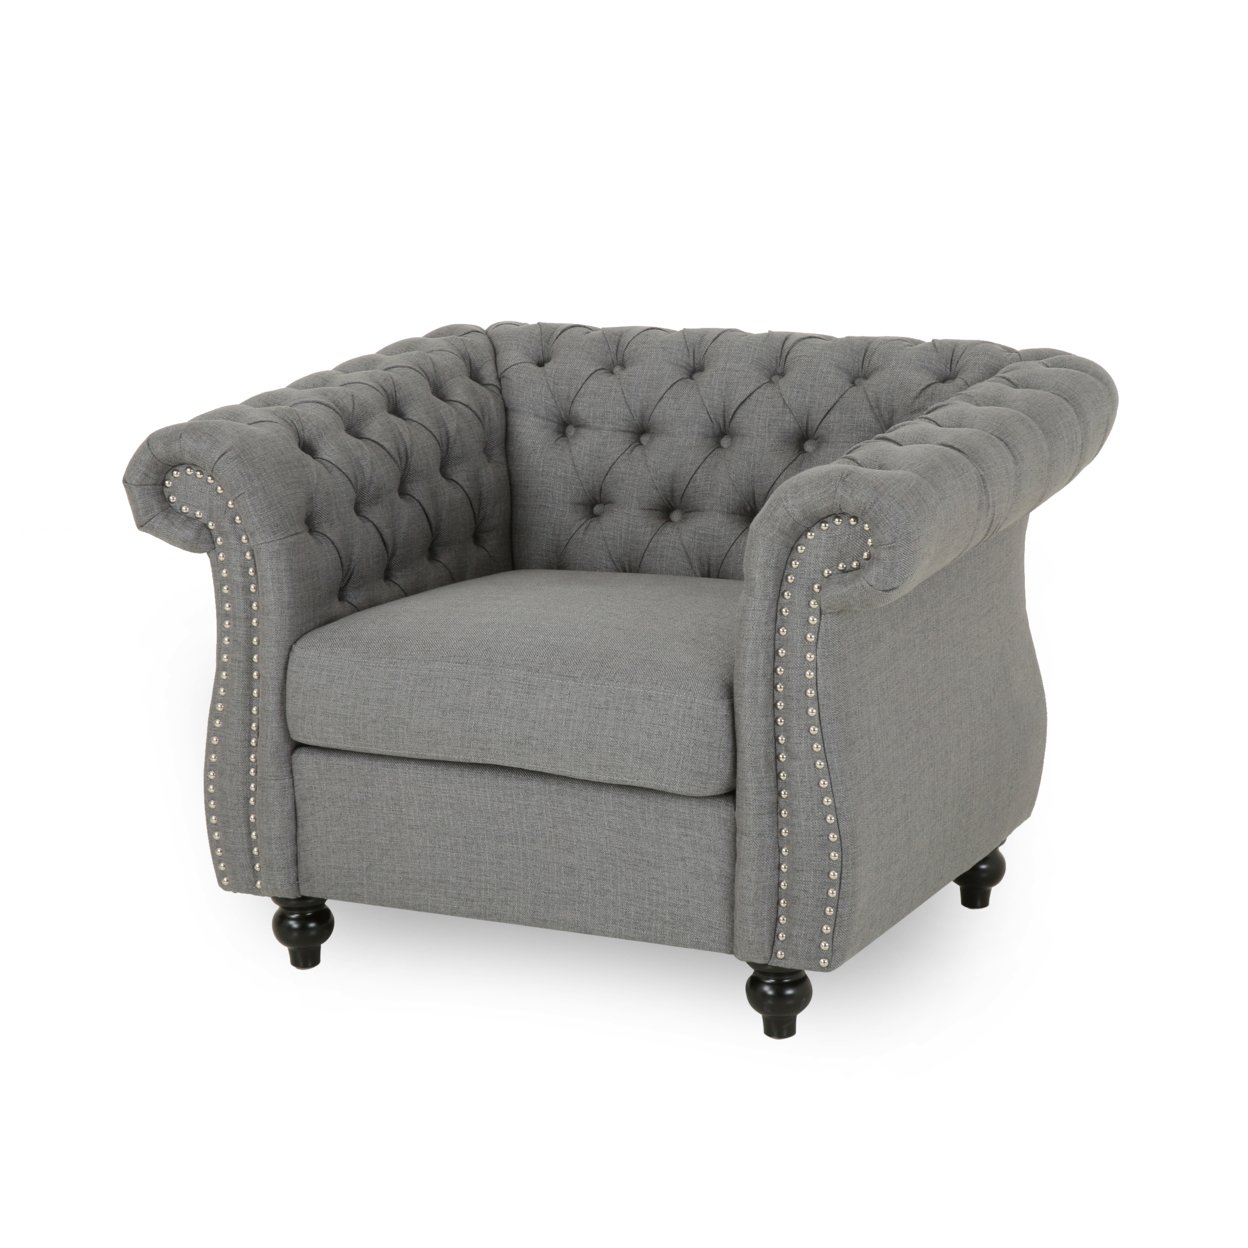 Leila Chesterfield Fabric Club Chair - Dark Gray, Dark Brown